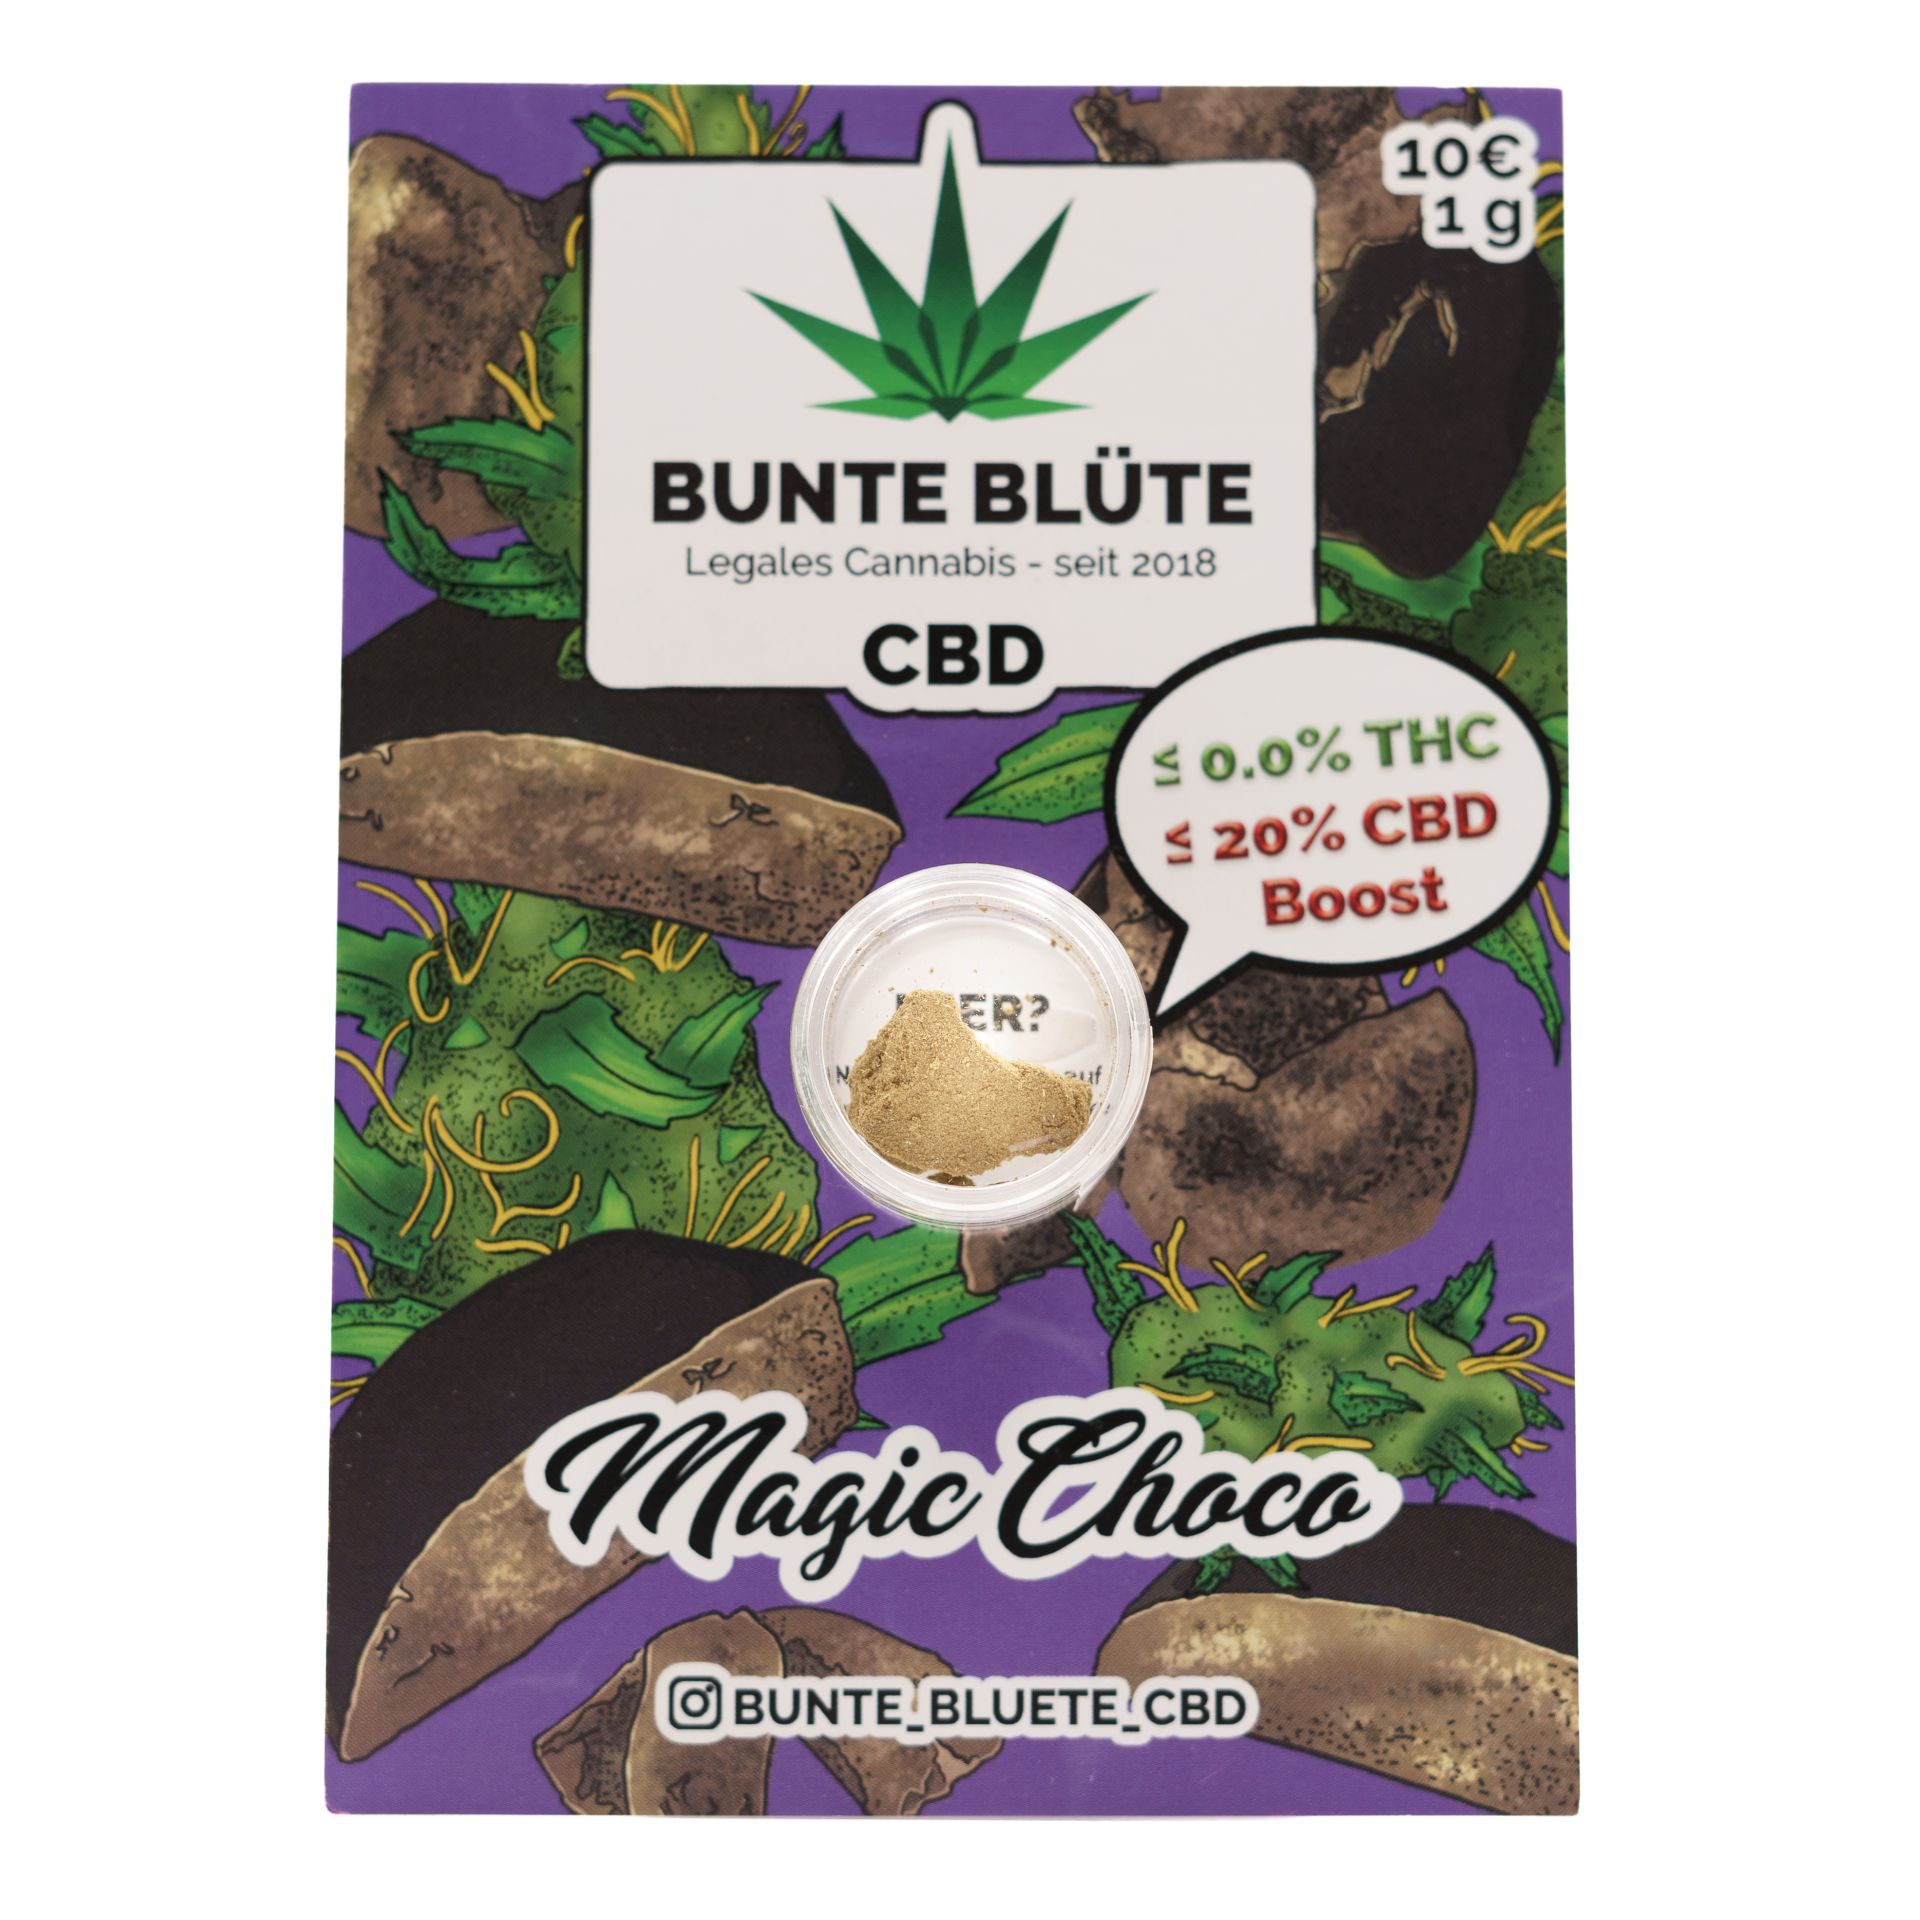 Bunte Blüte CBD Blüte - Magic Choco 20% 1g